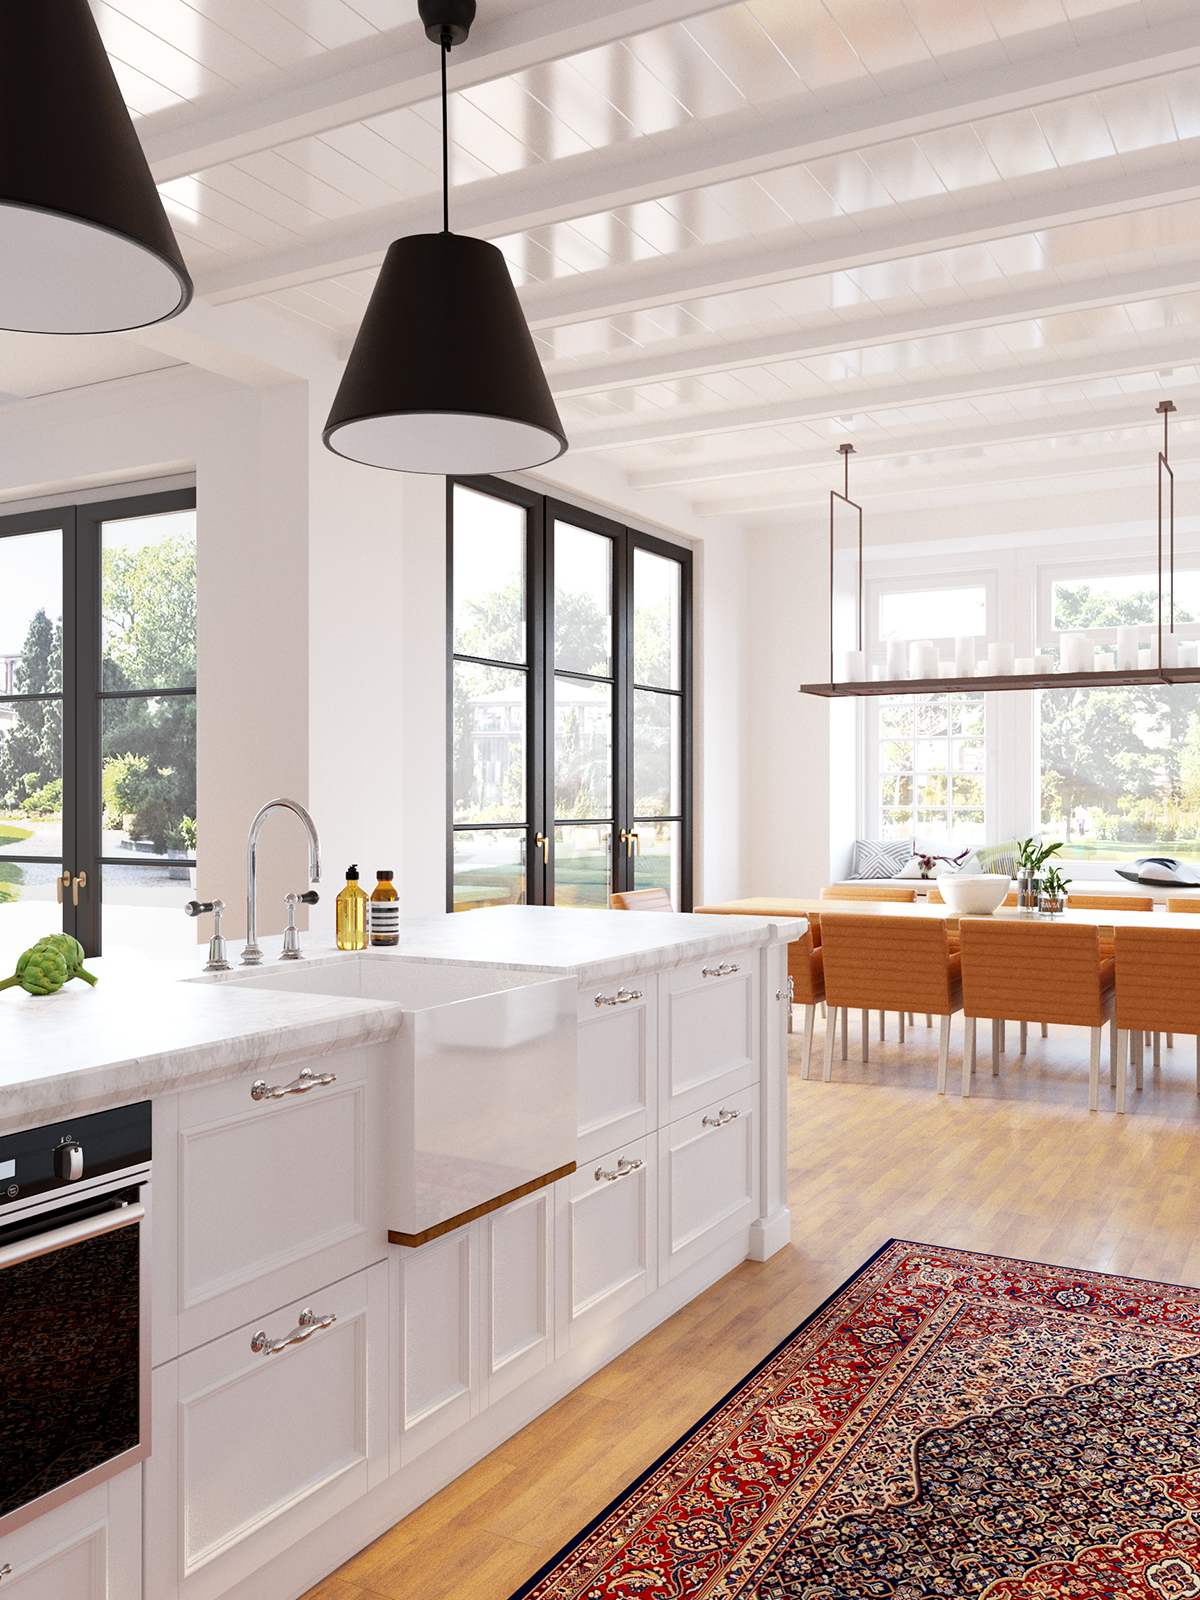 3dsmax archviz interiordesign corona render  PS living room kitchen